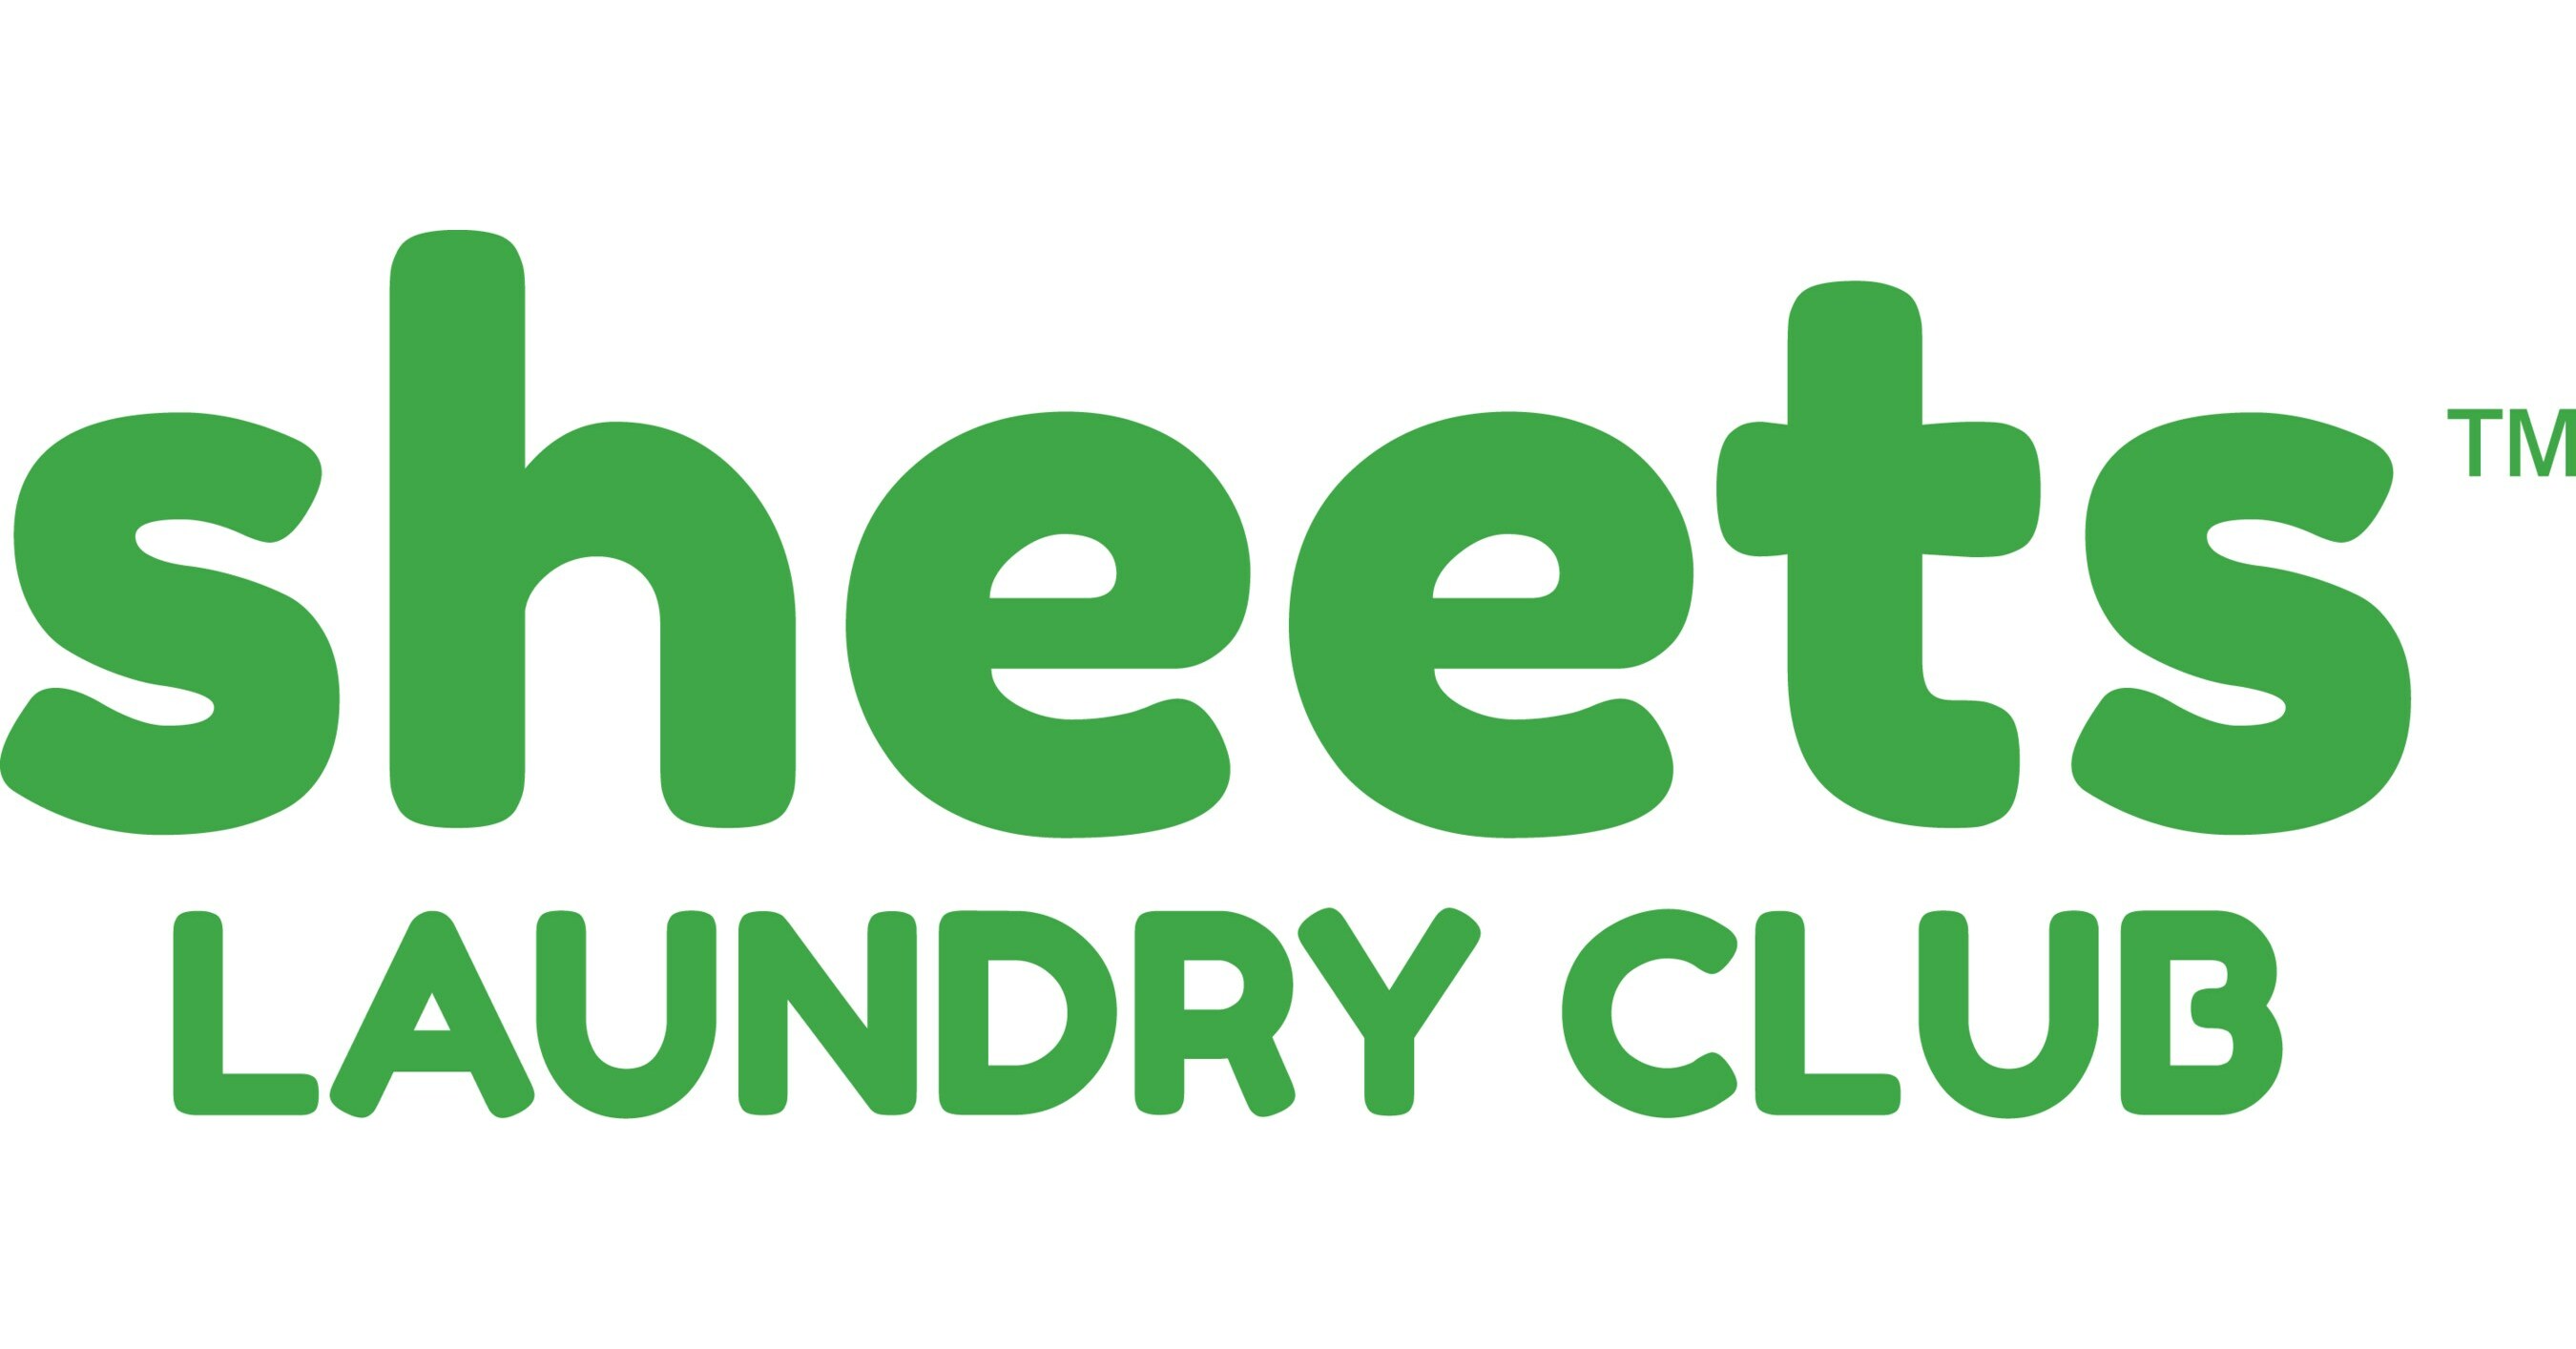 https://mma.prnewswire.com/media/2204796/sheets_laundry_club_Logo.jpg?p=facebook